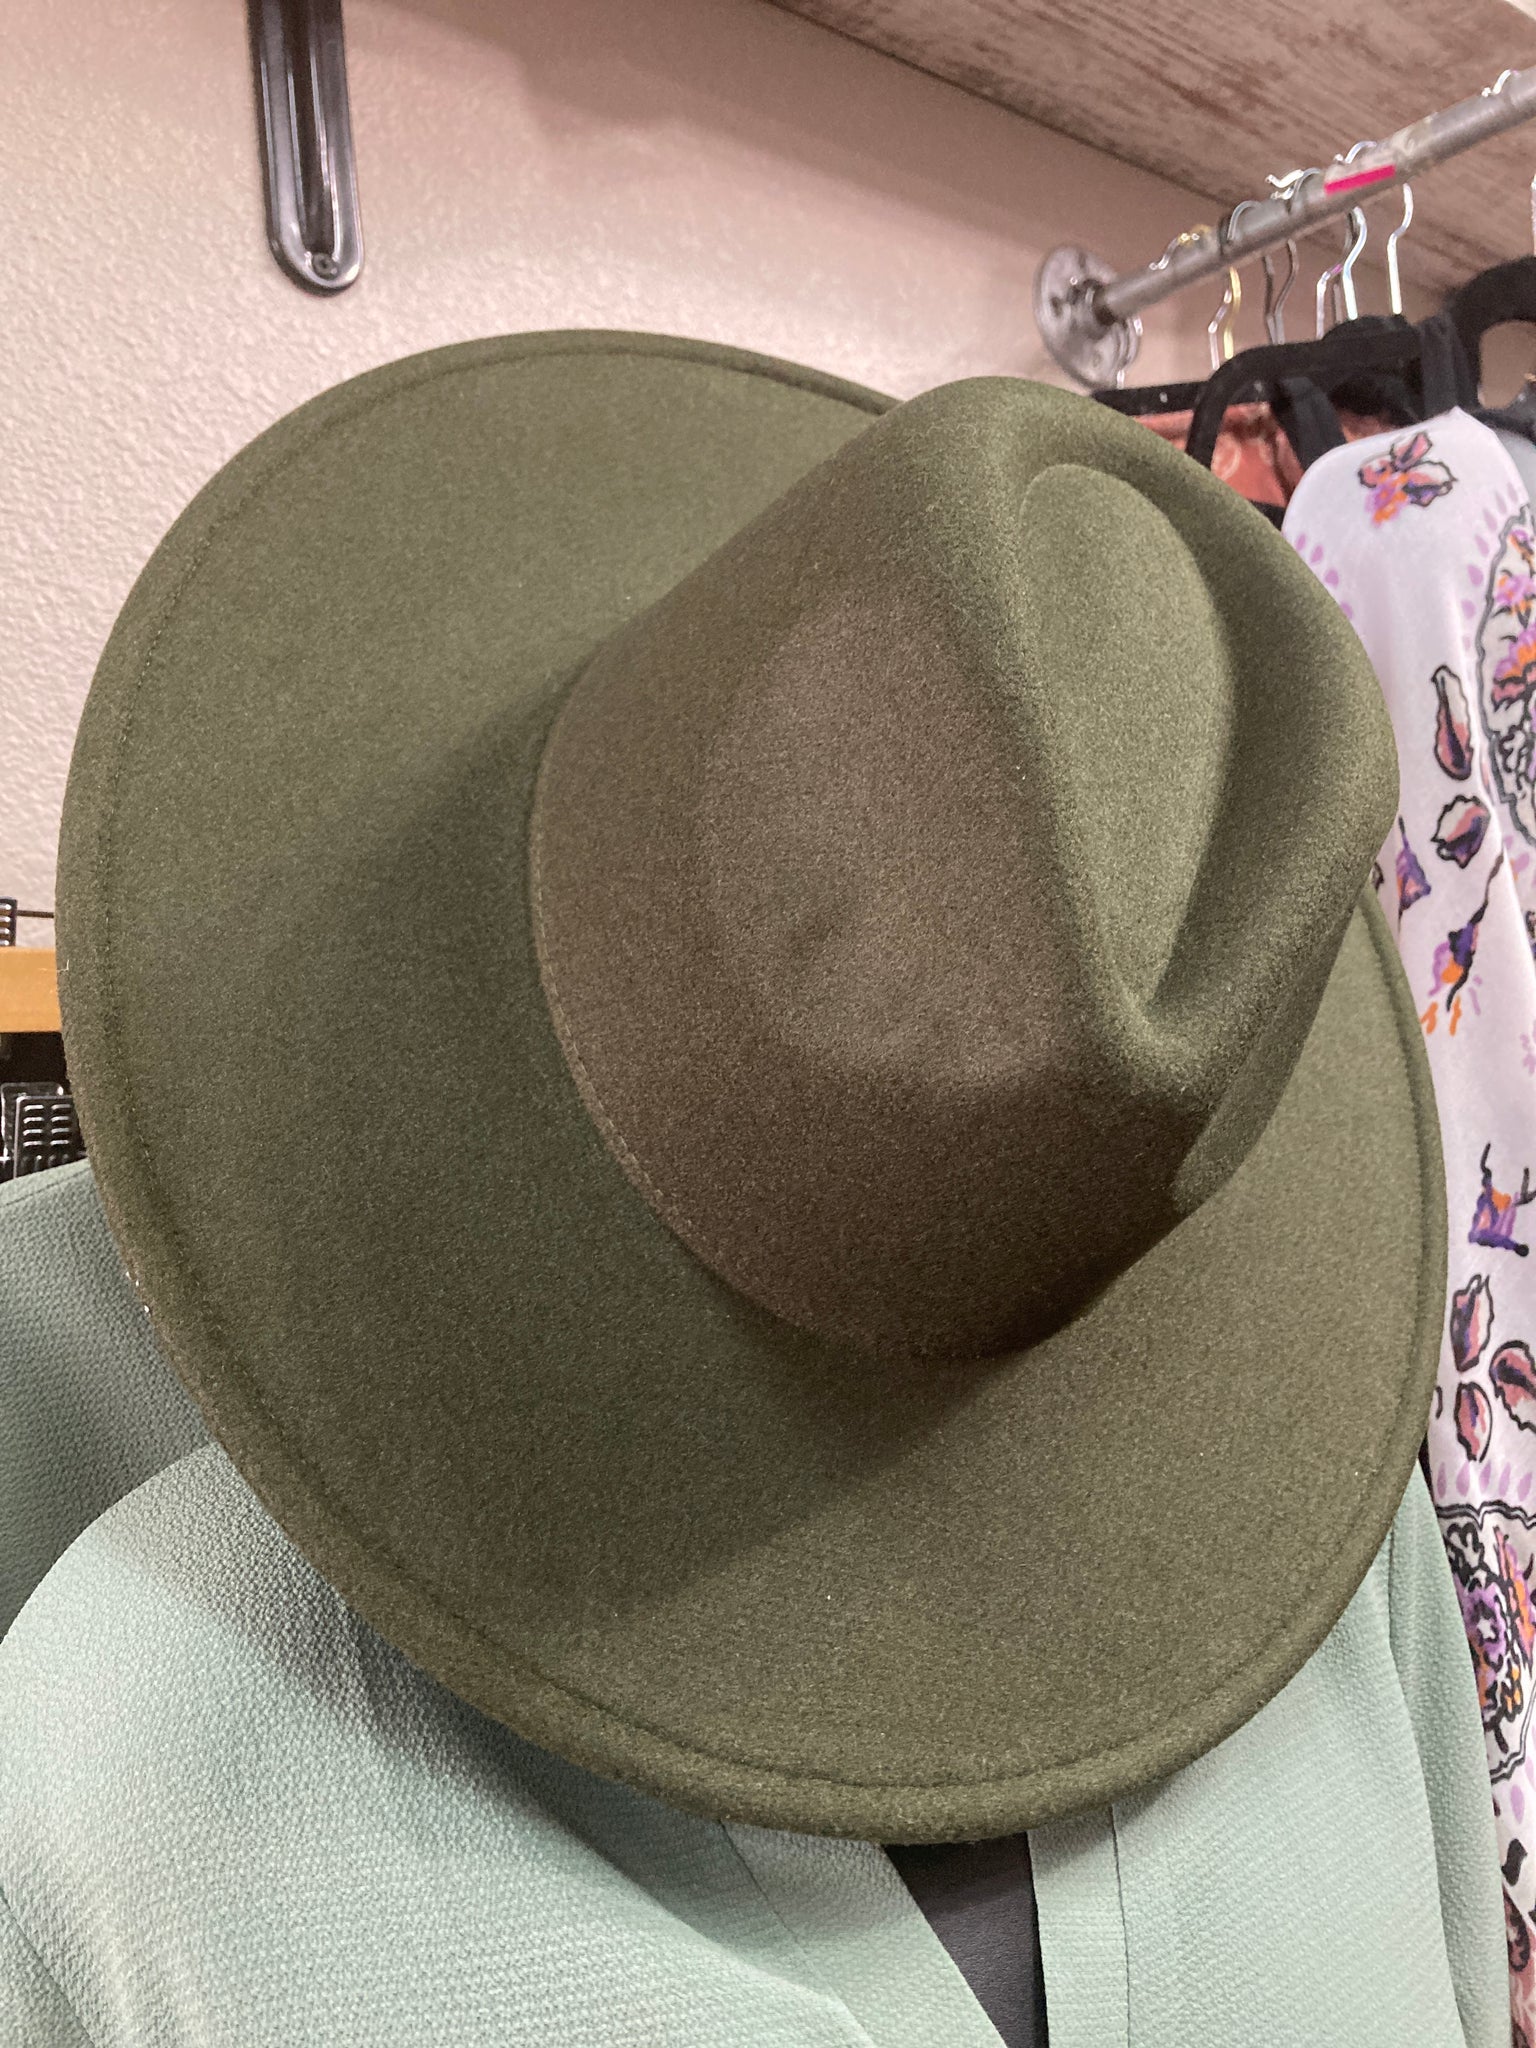 Olive green hat